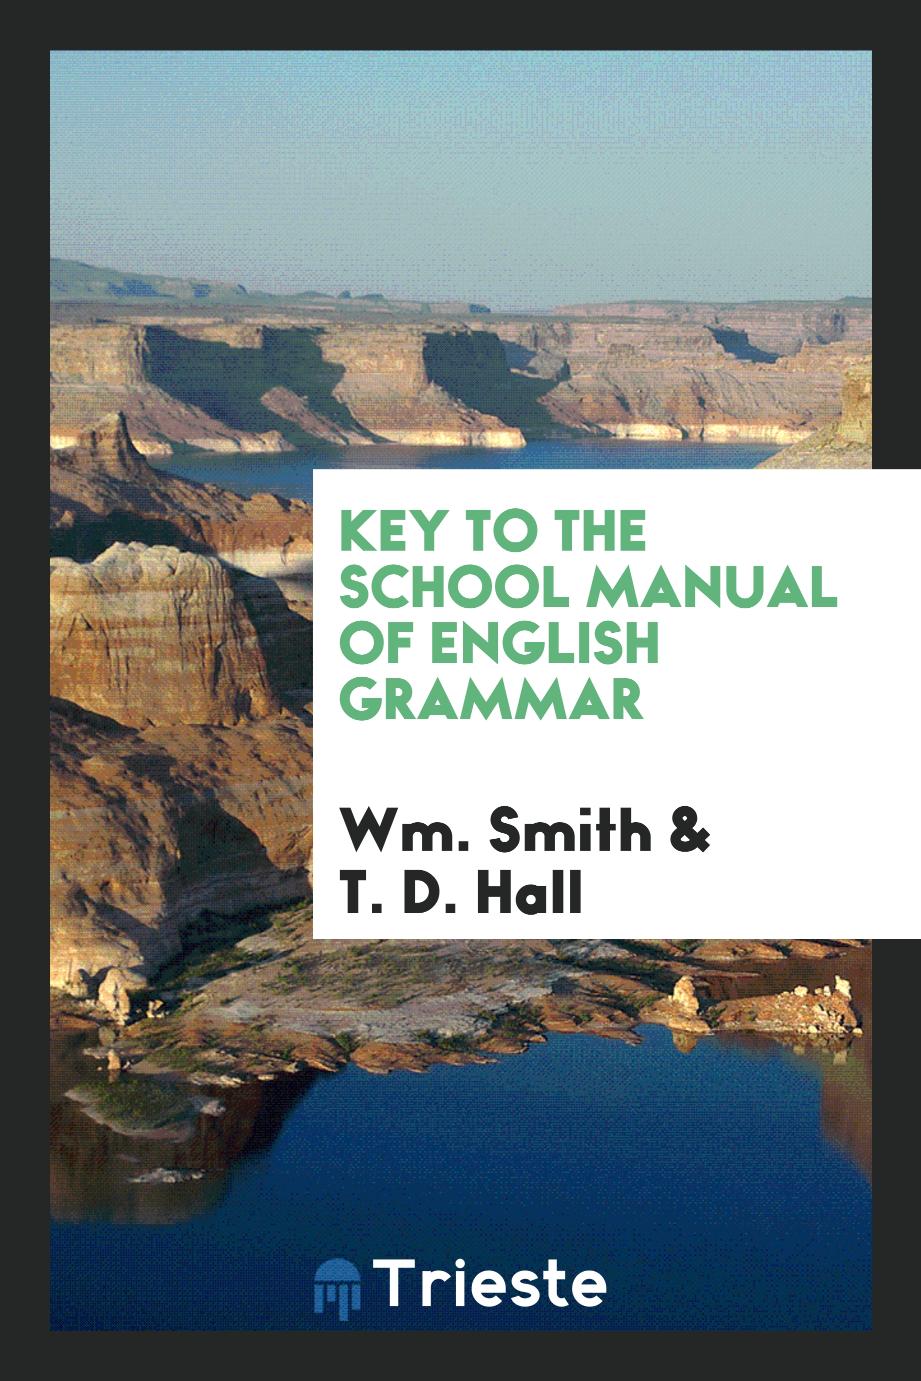 Key to the school manual of English grammar